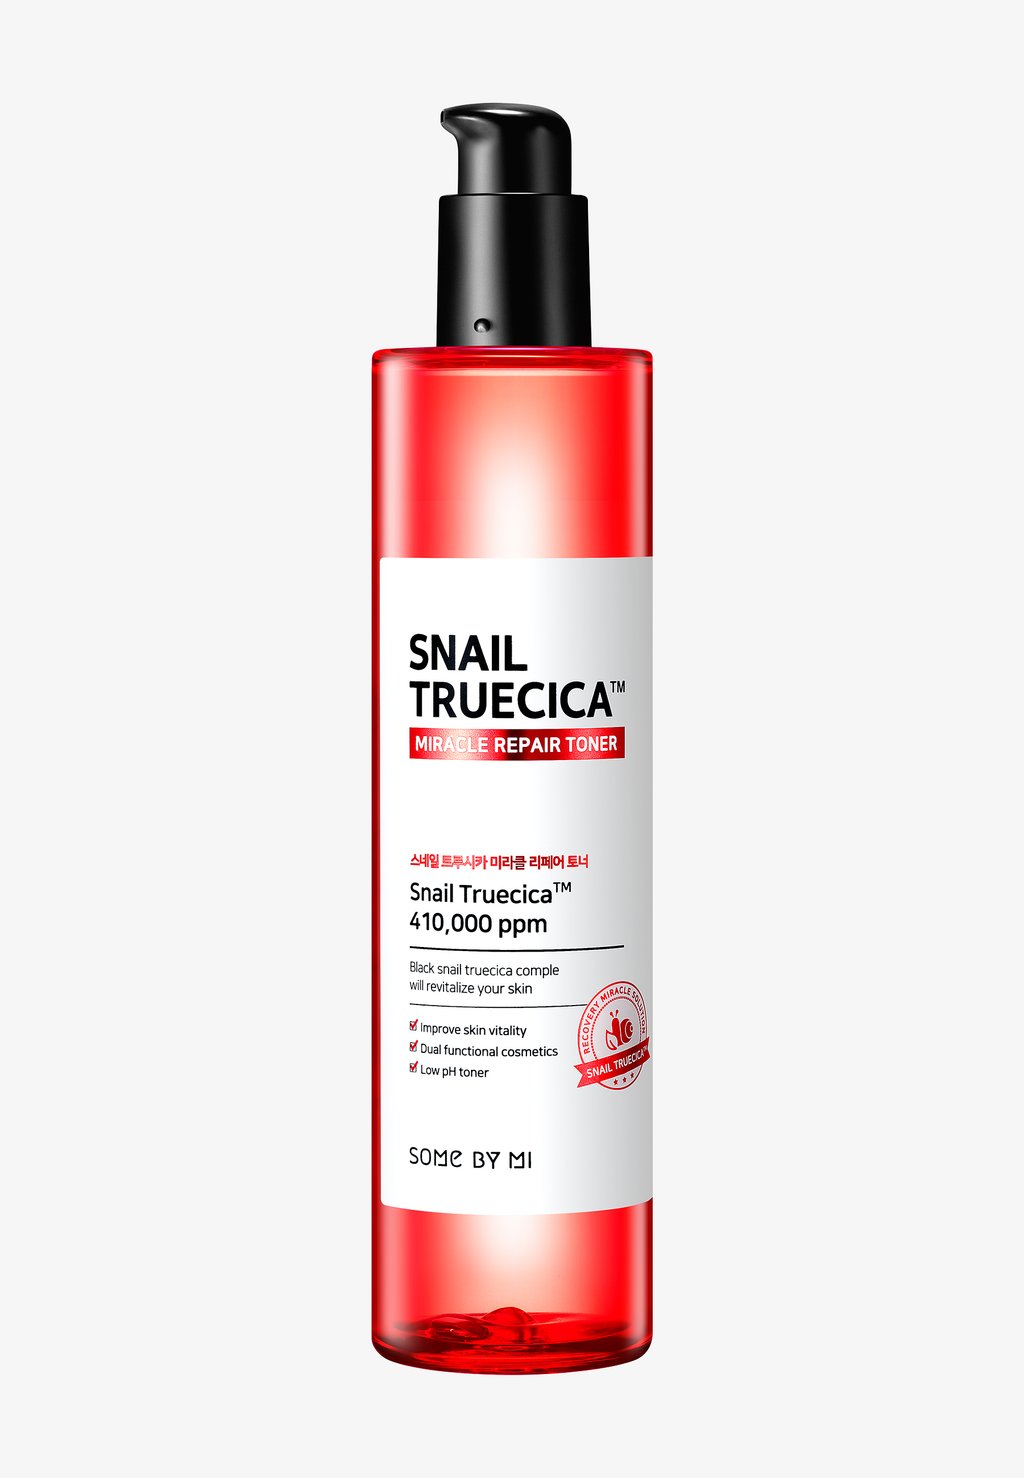 Ночные процедуры Snail Truecica Miracle Repair Toner SOME BY MI some by mi repair cream snail truecica miracle white 2 11 oz 60 g